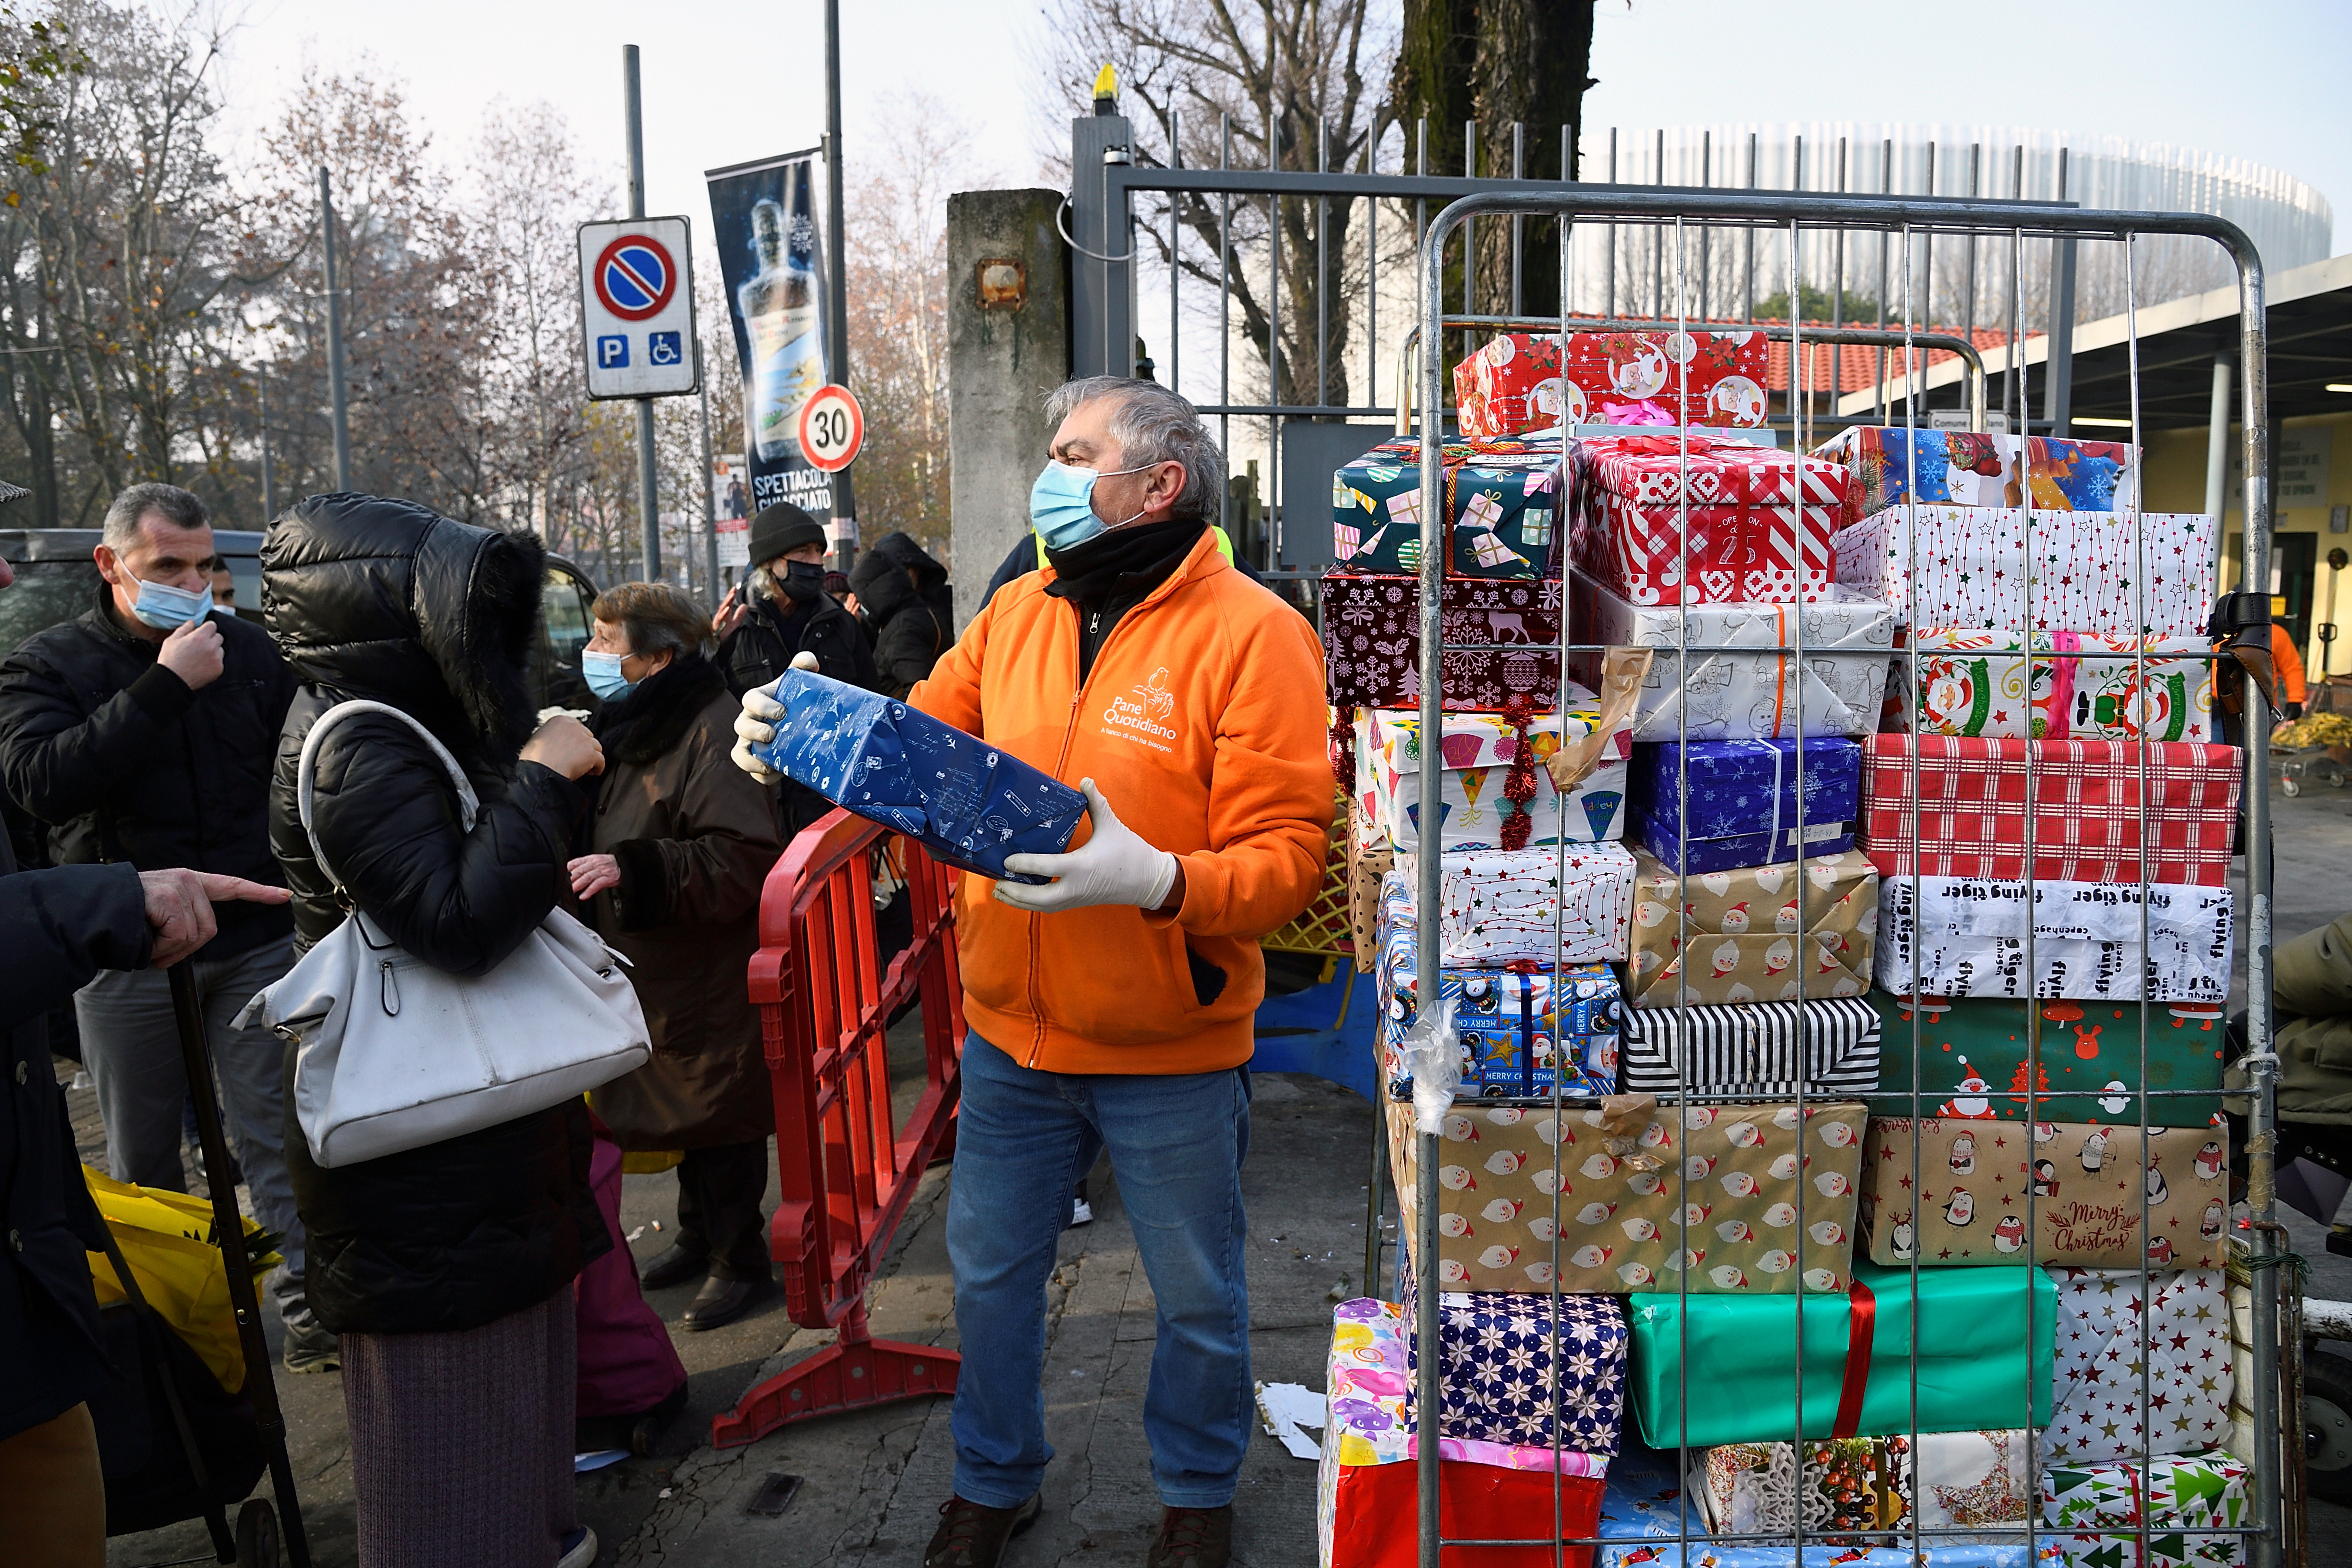 Queues form outside Milan food banks as crisis bites ahead of Christmas